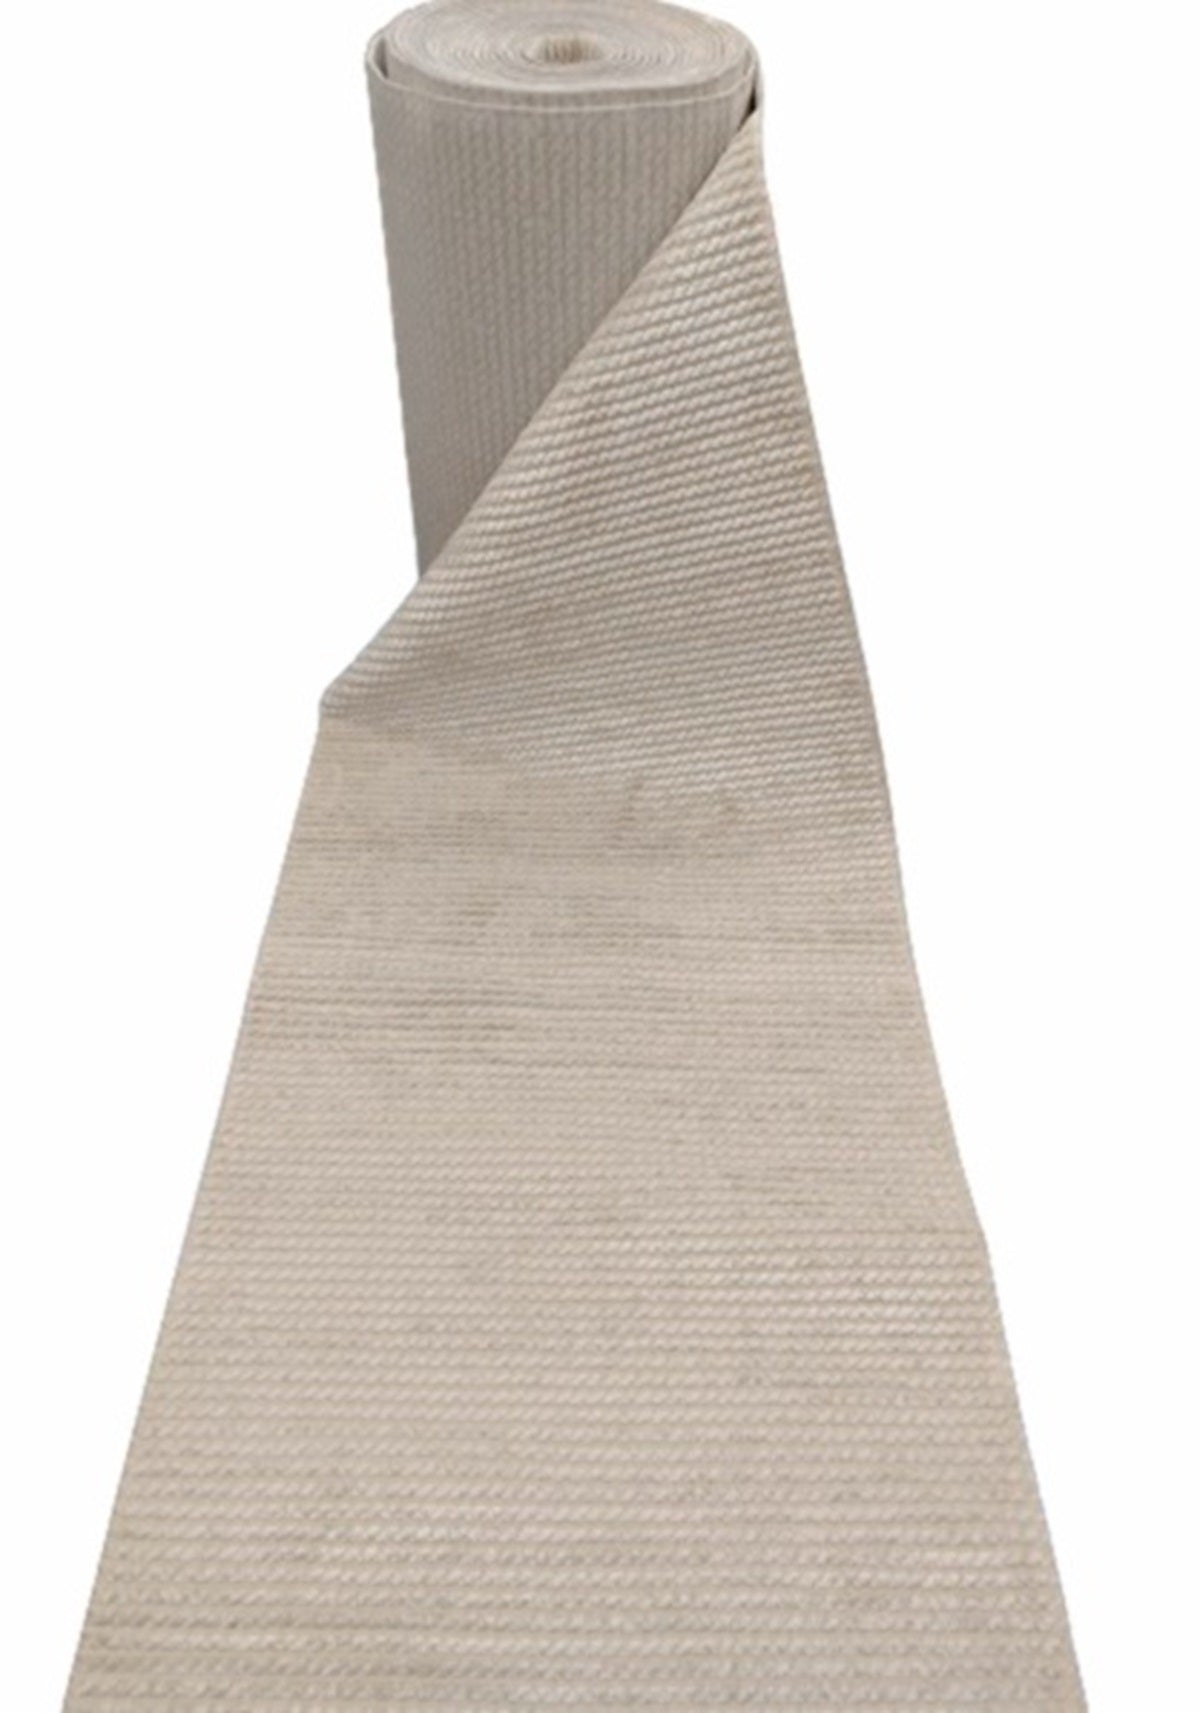 Traversa Pierre Cardin Line, crem, latime 80 cm (surfilata)